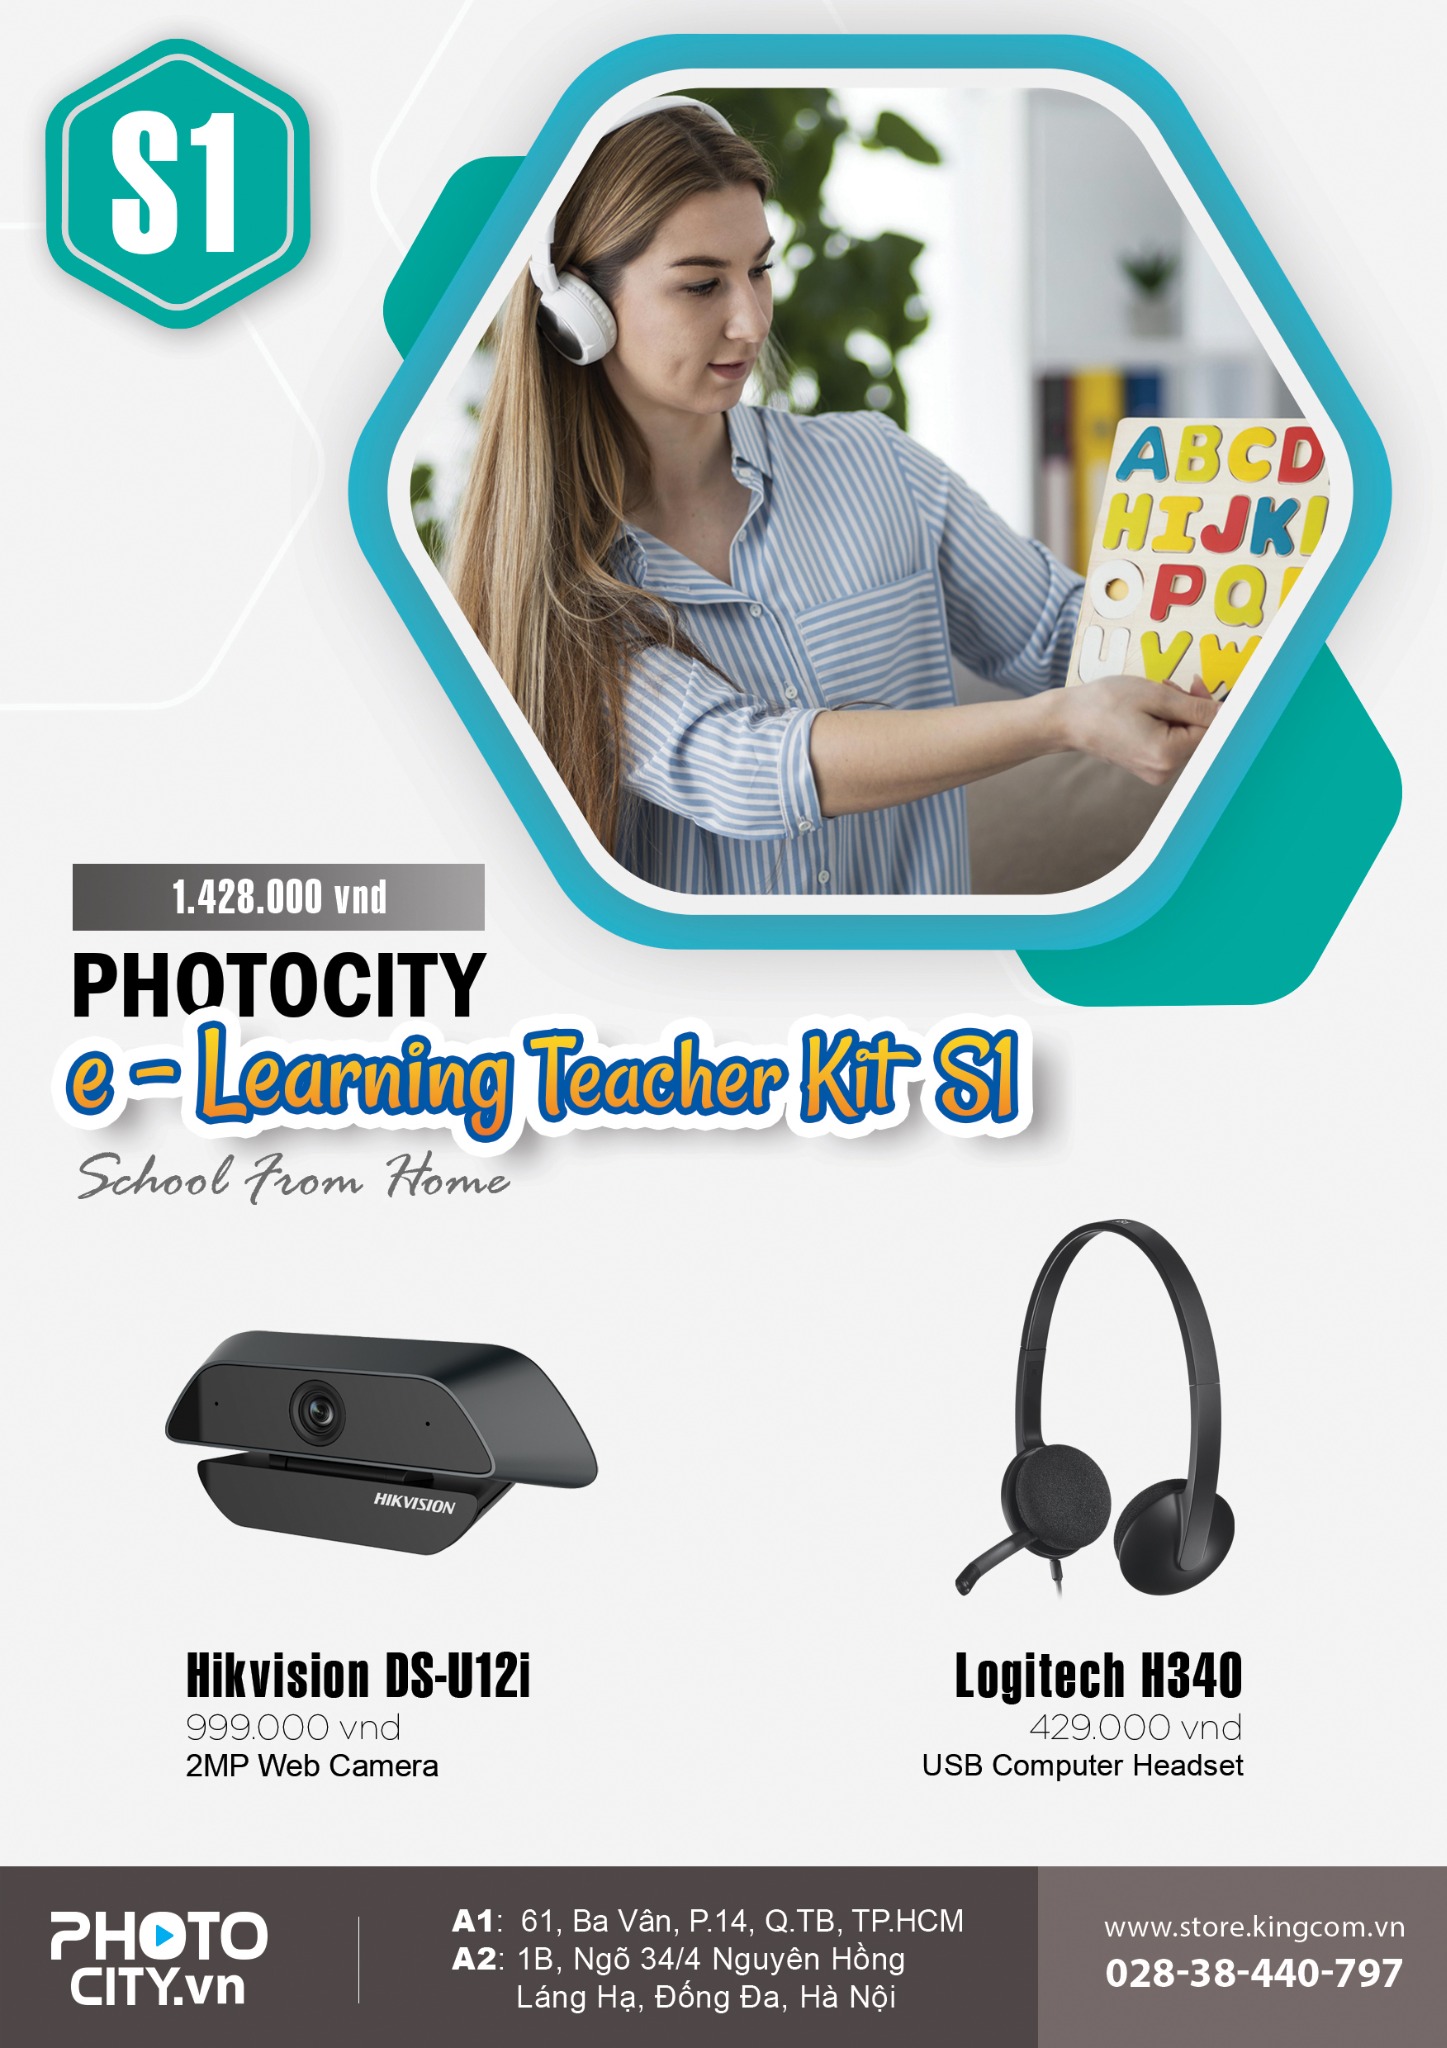 PhotoCity e -learning Teacher Kit S1 (Bộ dụng cụ dạy học online)